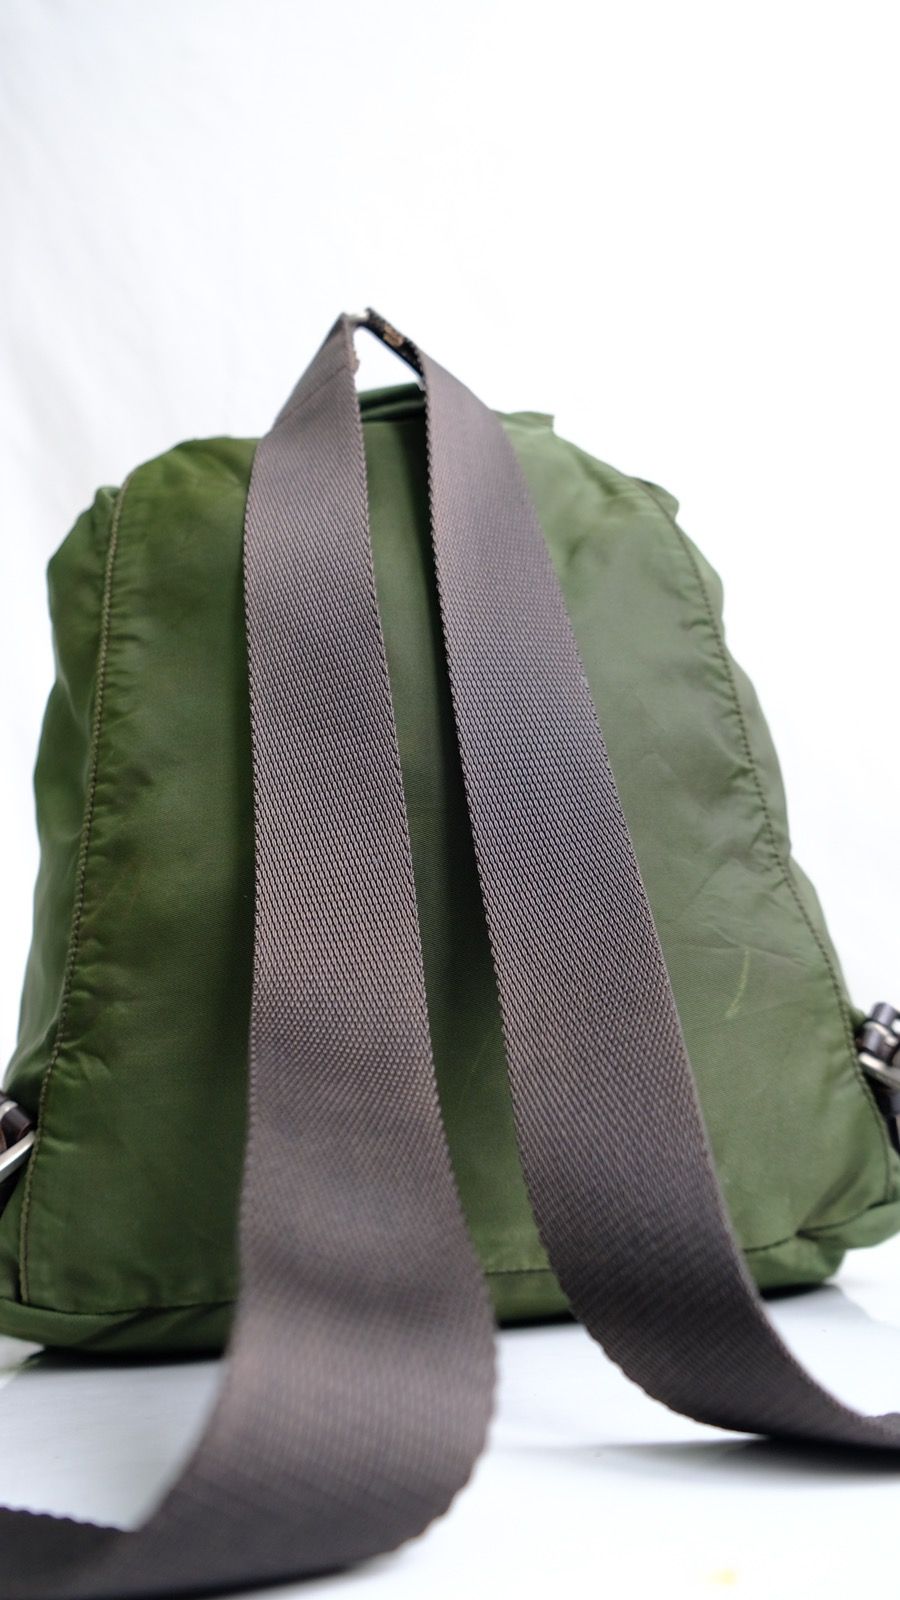 Authentic vintage Prada green army nylon backpack - 3